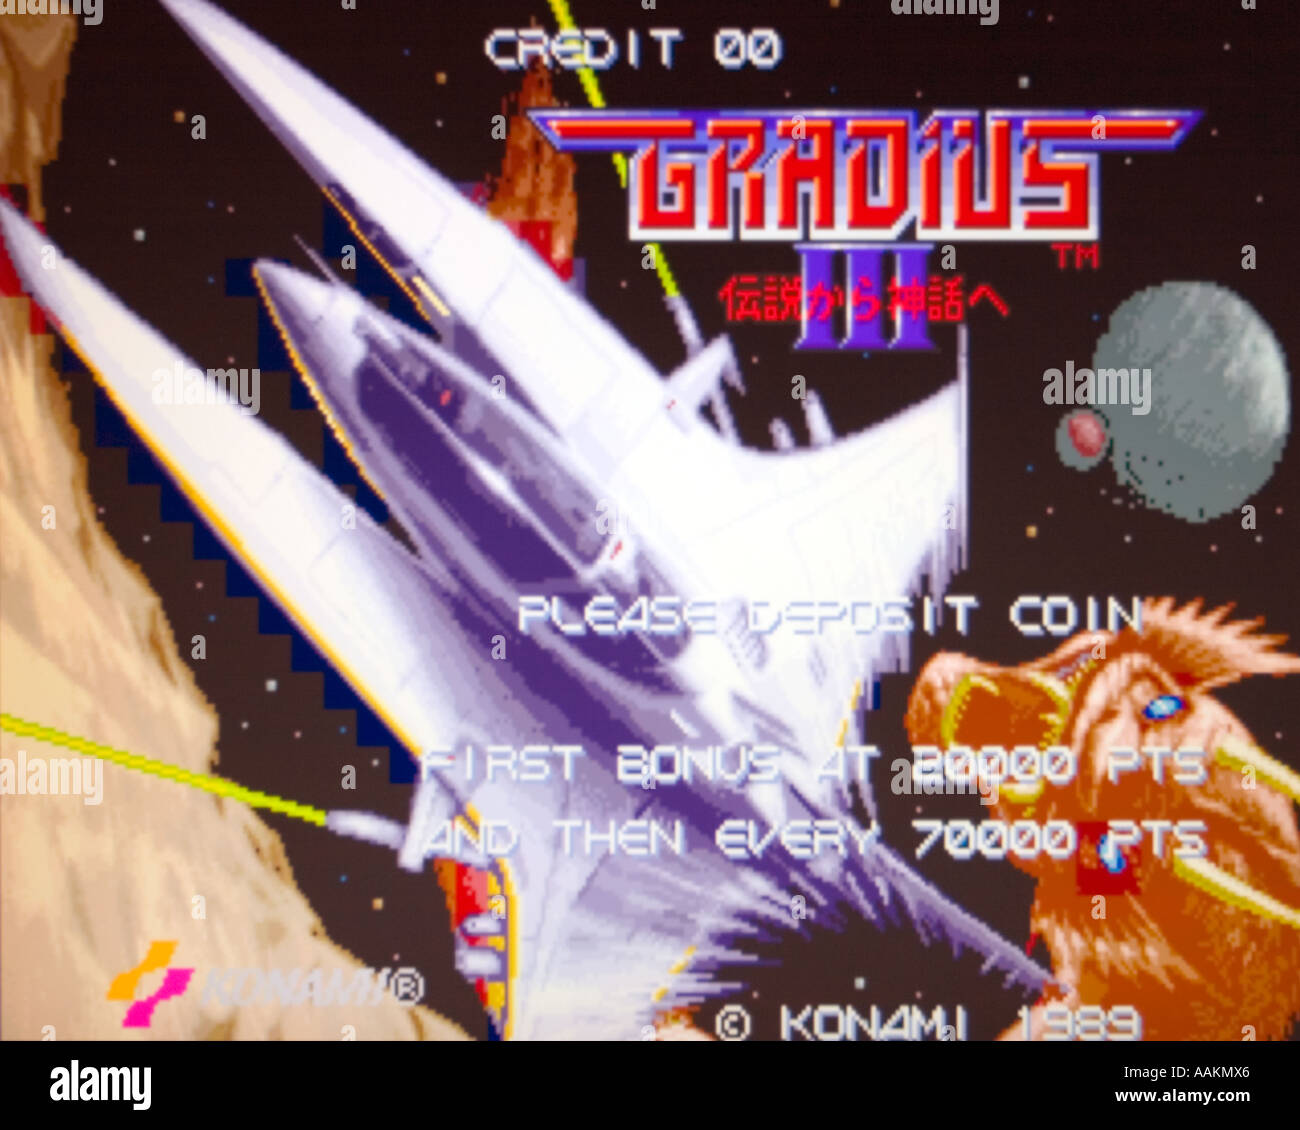 Gradius Konami 1989 vintage videogioco arcade screenshot - solo uso editoriale Foto Stock